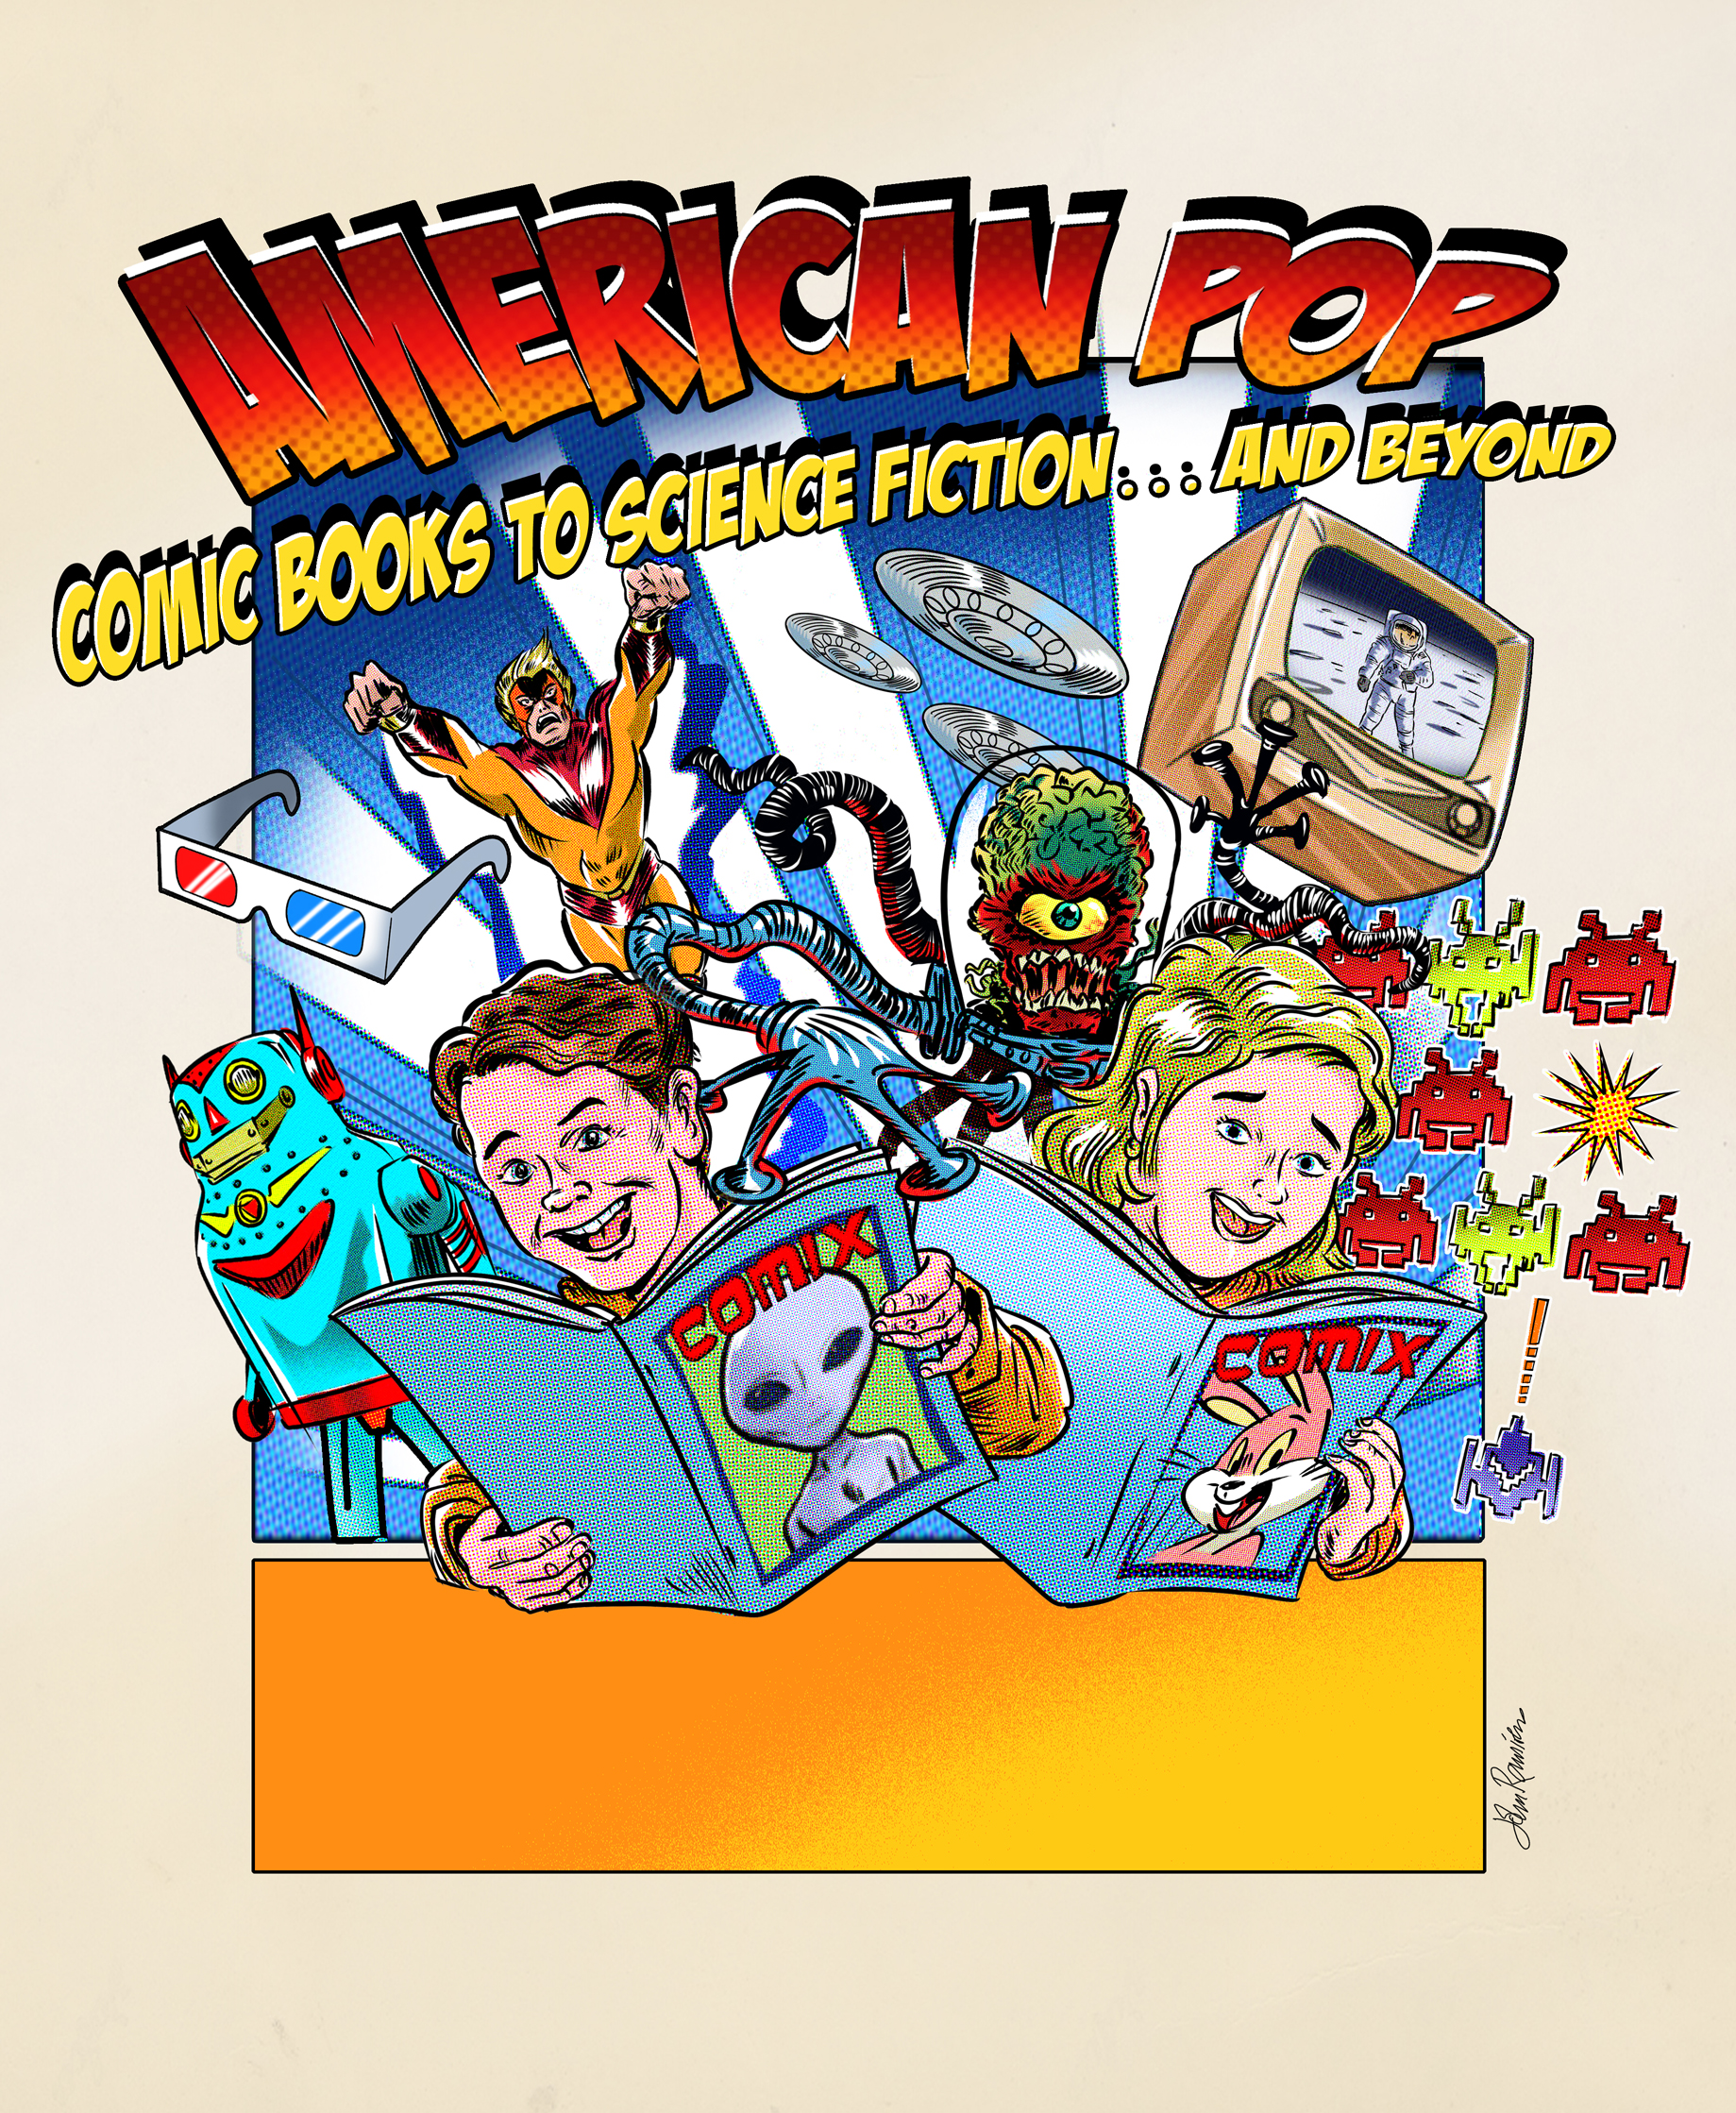 57 Top Best Writers American Pop Book for Kids